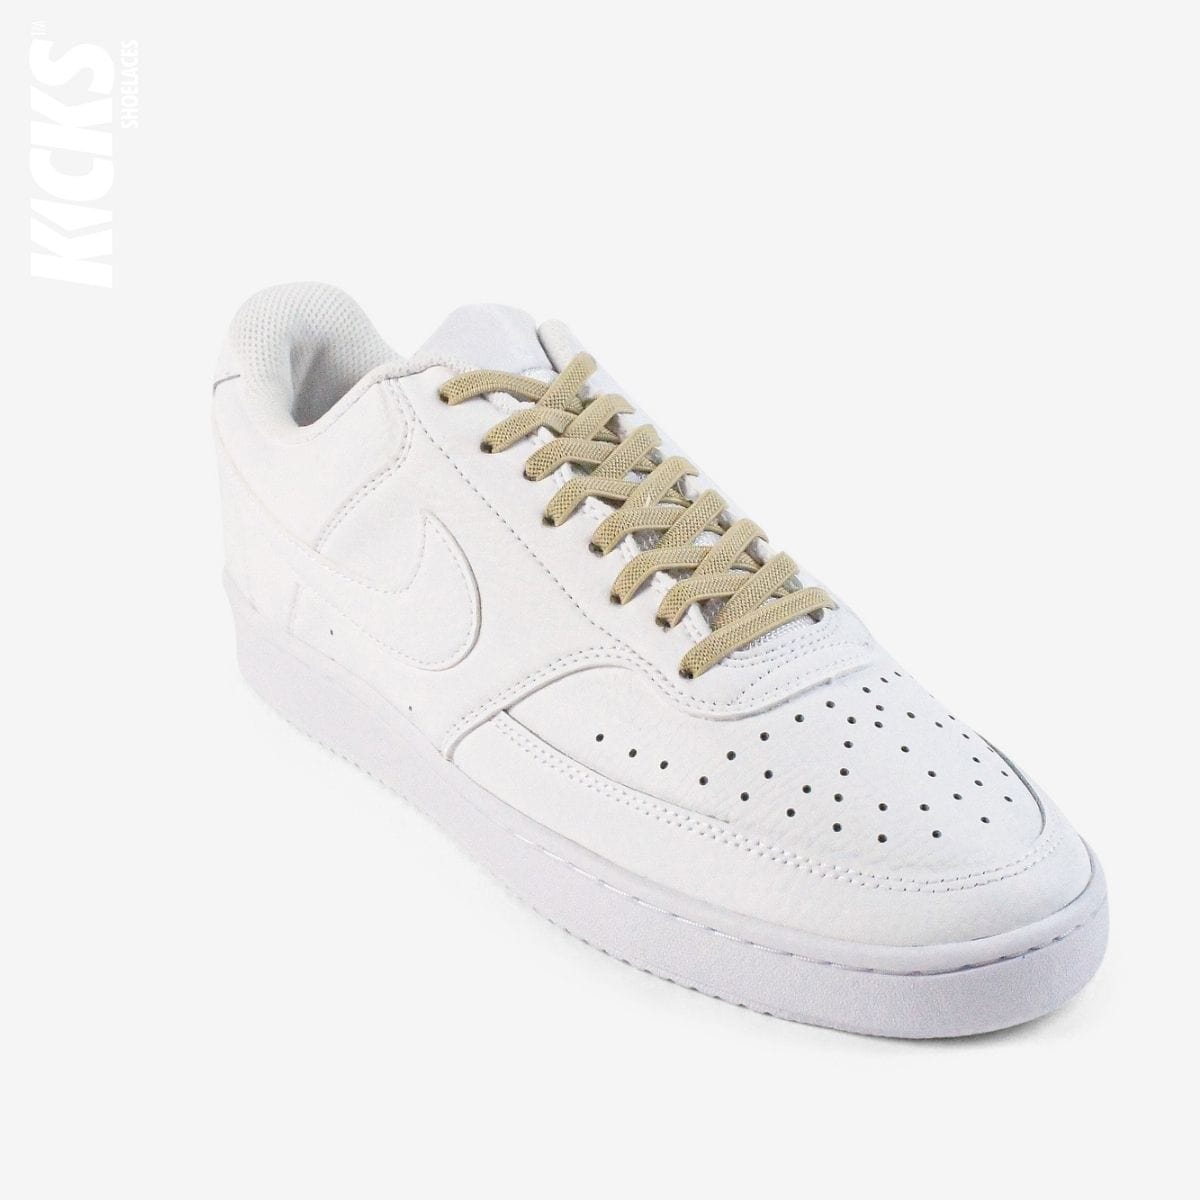 no-tie-shoelaces-with-khaki-laces-on-nike-white-sneakers-by-kicks-shoelaces